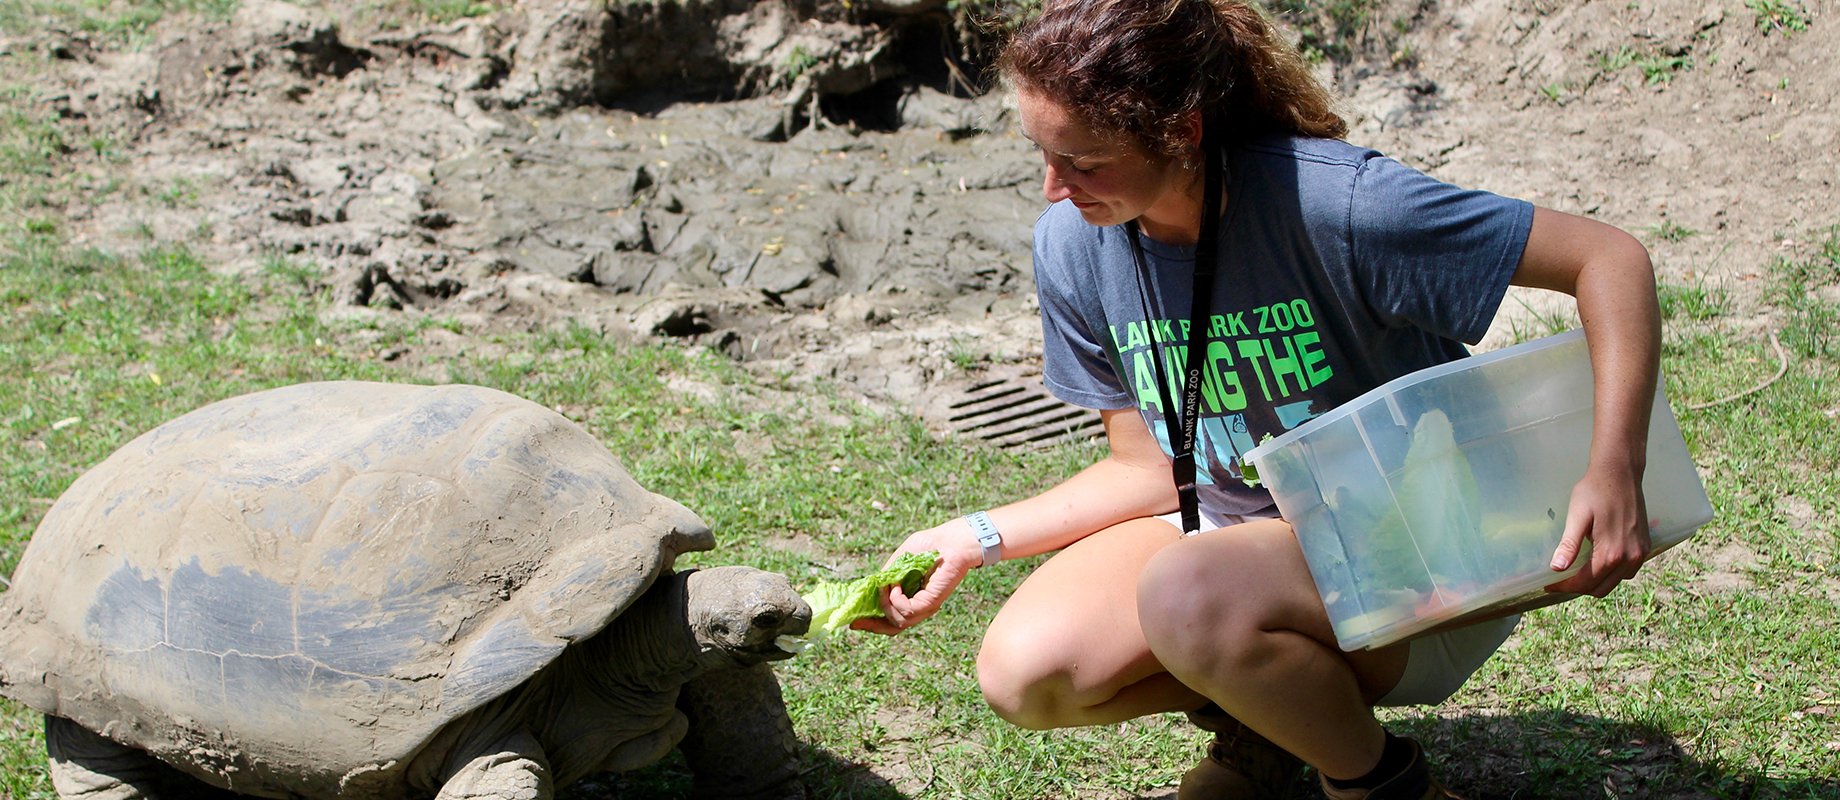 Simpson College graduate Emma Fleddermann feeds a tortoise at Blank Park Zoo